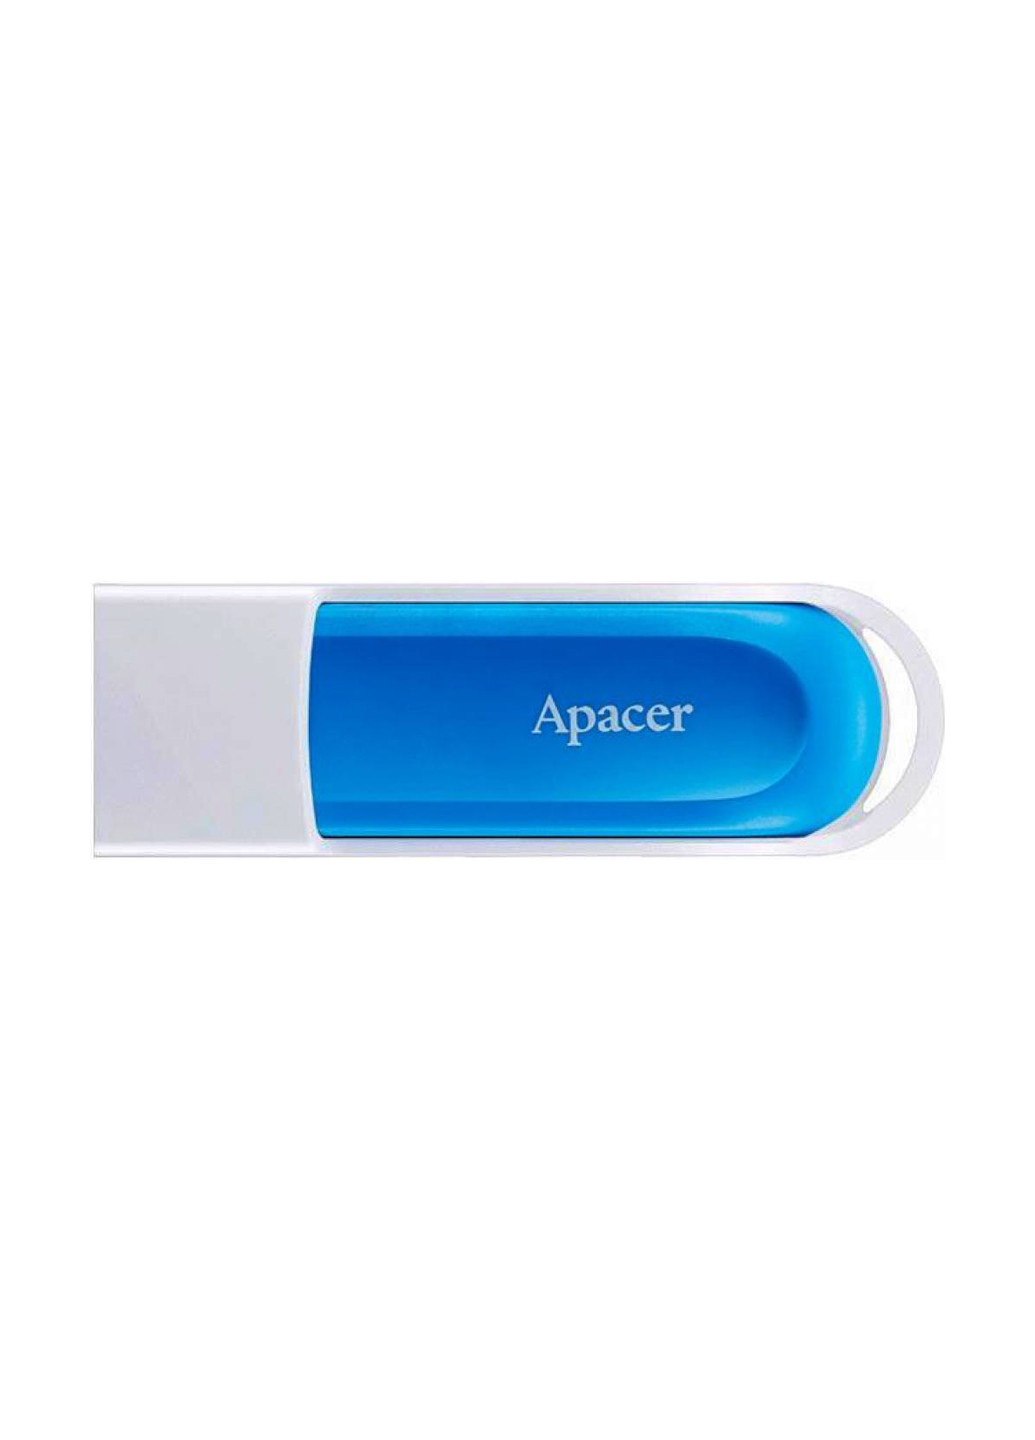 Флеш память USB AH23A 32GB USB 2.0 Blue/White (AP32GAH23AW-1) Apacer флеш память usb apacer ah23a 32gb usb 2.0 blue/white (ap32gah23aw-1) (135165409)